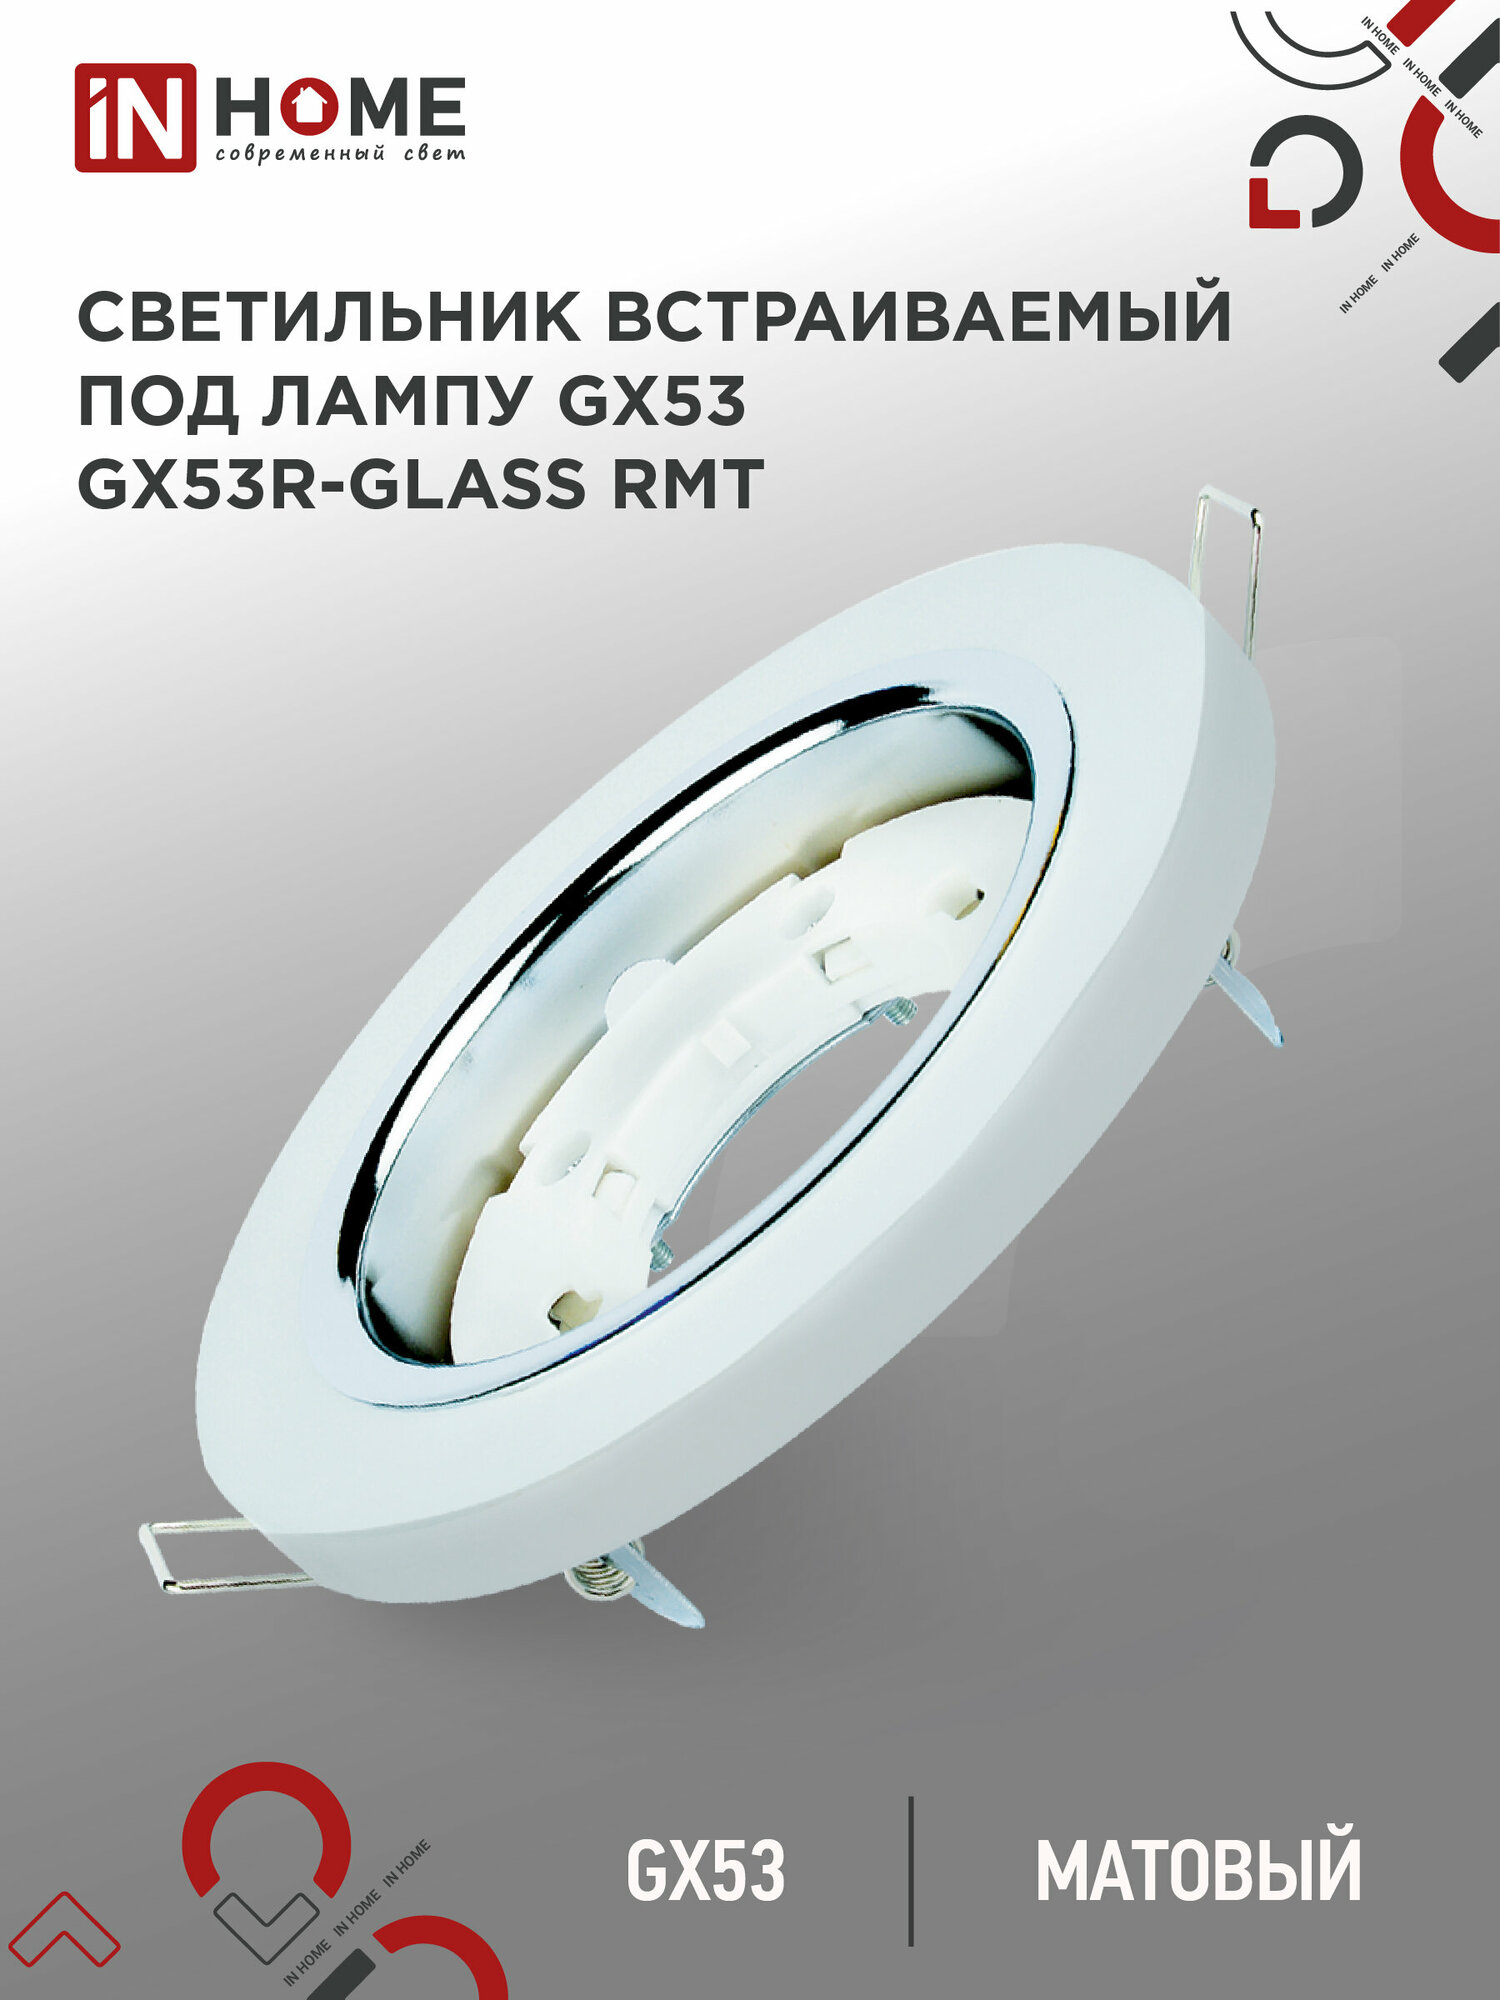 Светильник встраиваемый GX53R-glass RMT круг под GX53 матовый IN HOME